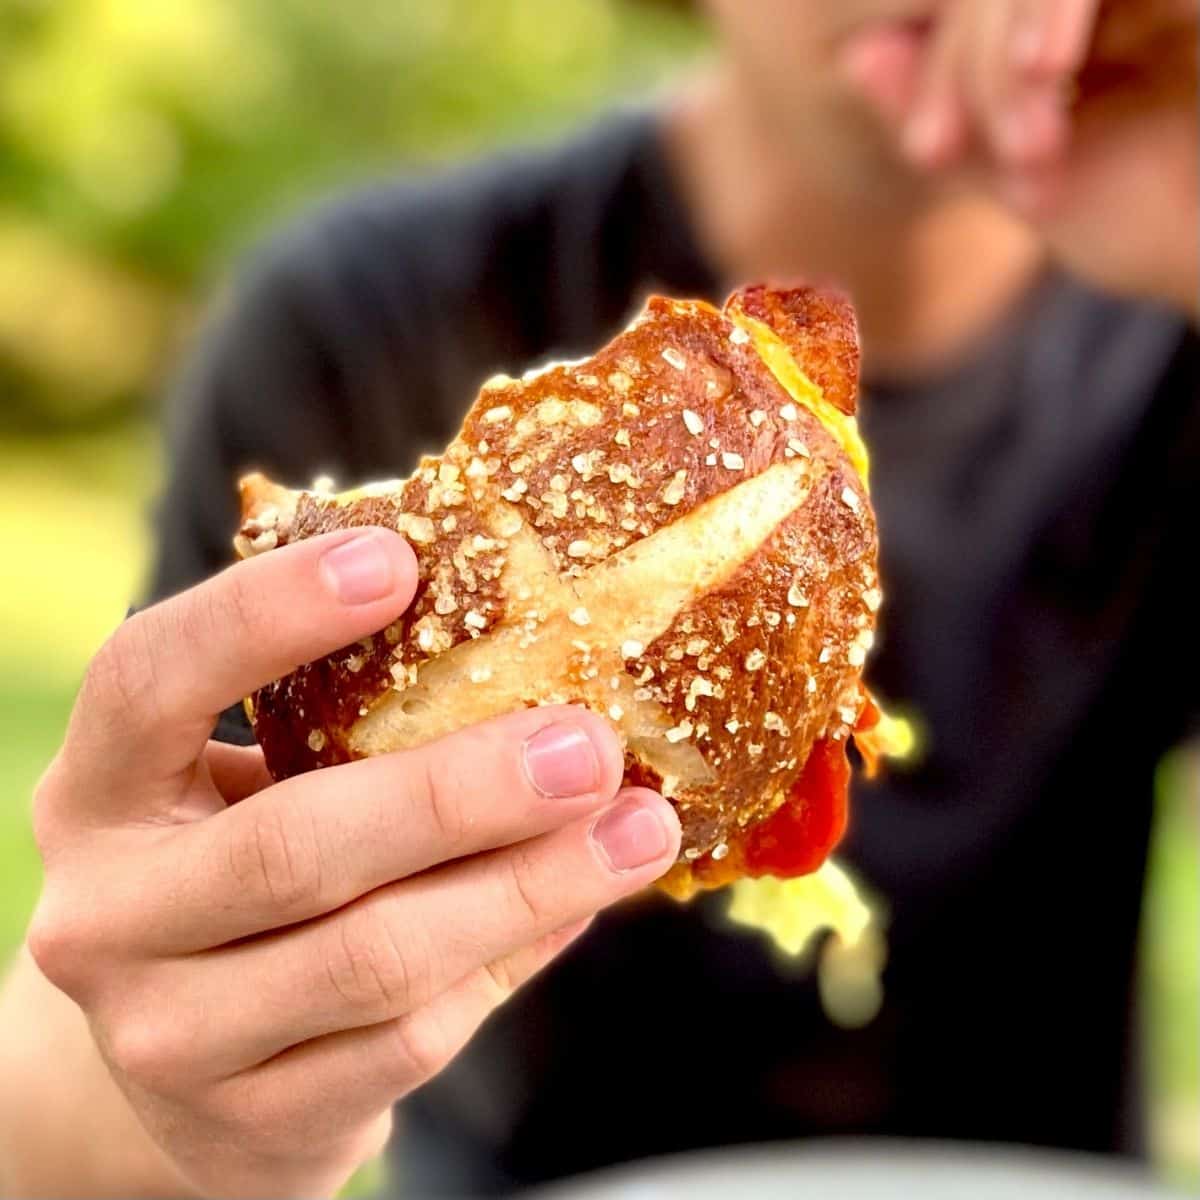 pretzel bun burger in hand